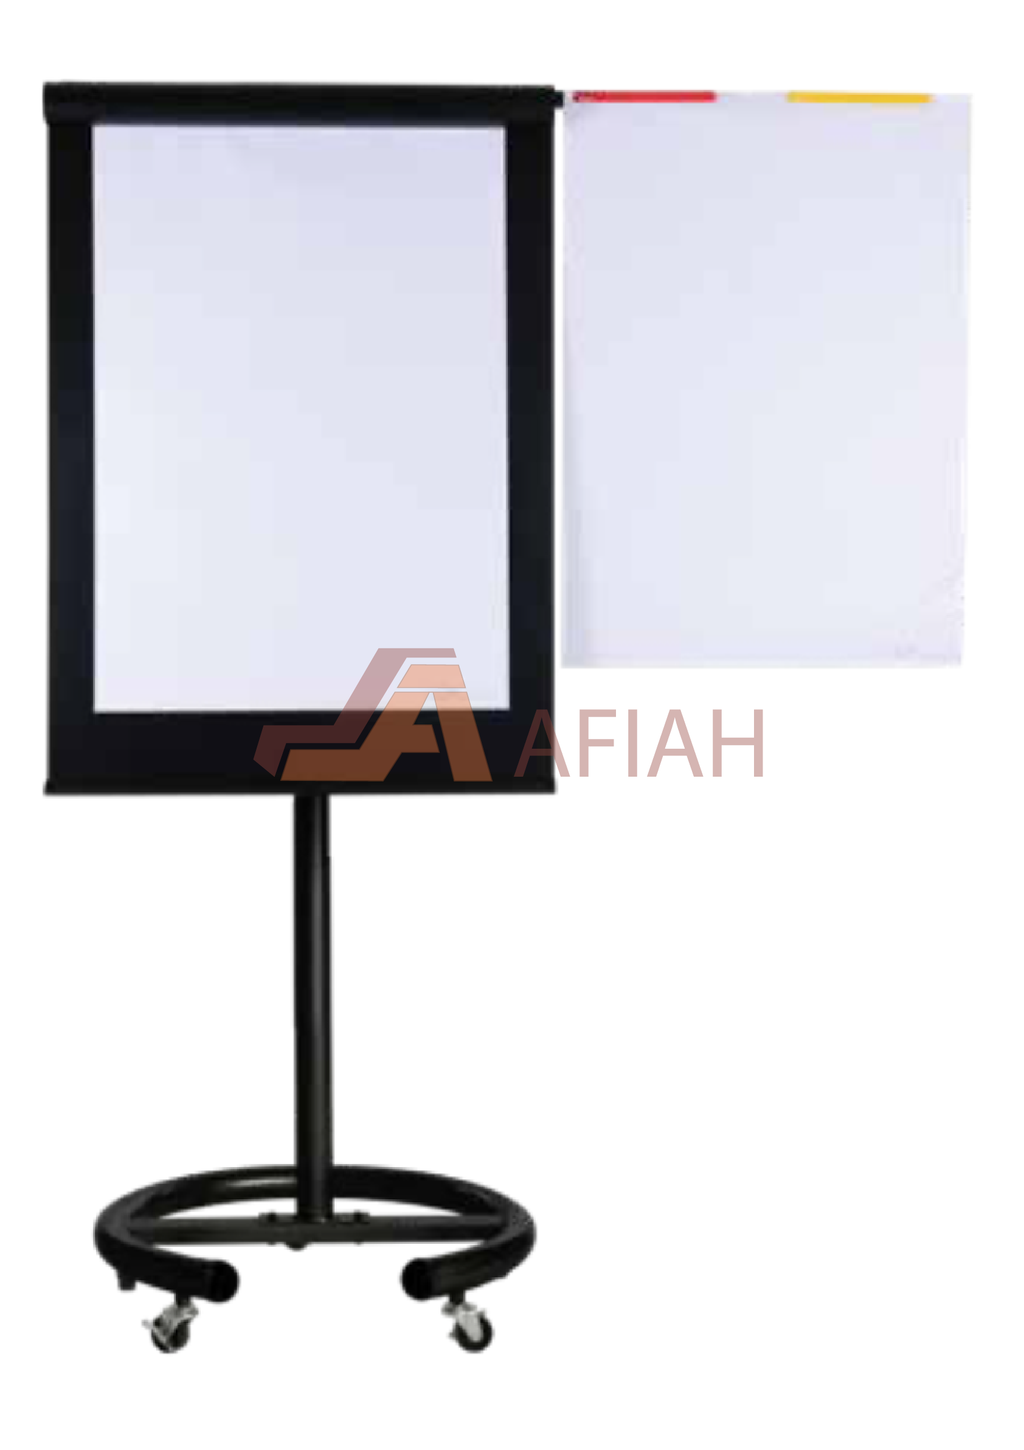 Flip Chart, Whiteboard - Afia Manufacturing Sdn Bhd, Afiah Trading Company